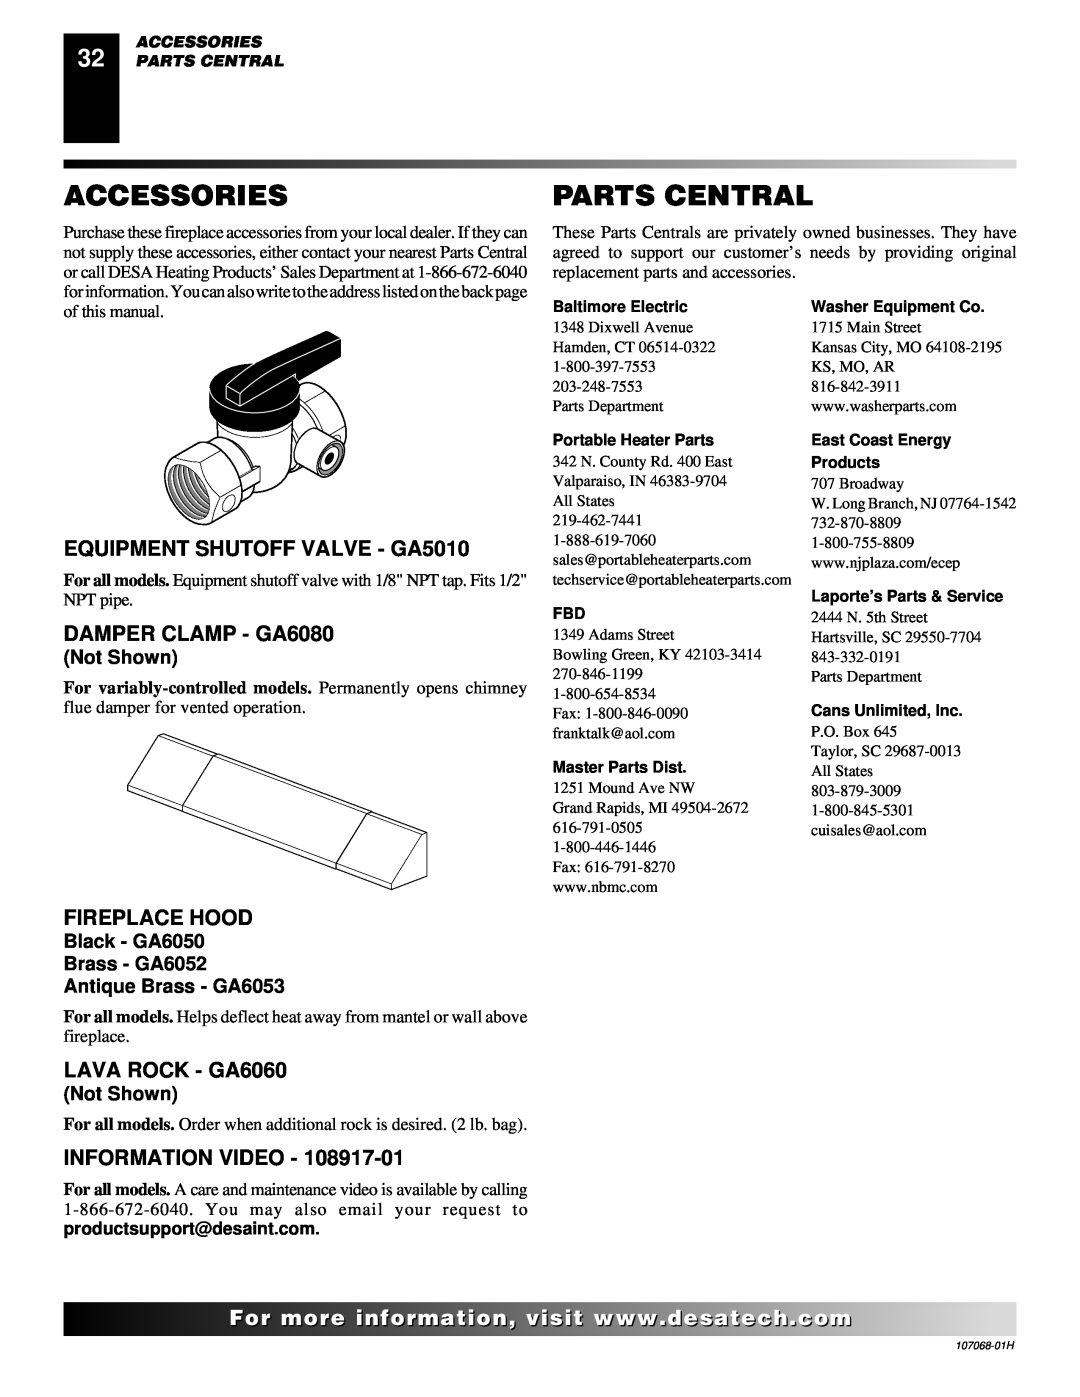 Desa CLD3018PT Accessories, Parts Central, EQUIPMENT SHUTOFF VALVE - GA5010, DAMPER CLAMP - GA6080, Fireplace Hood 